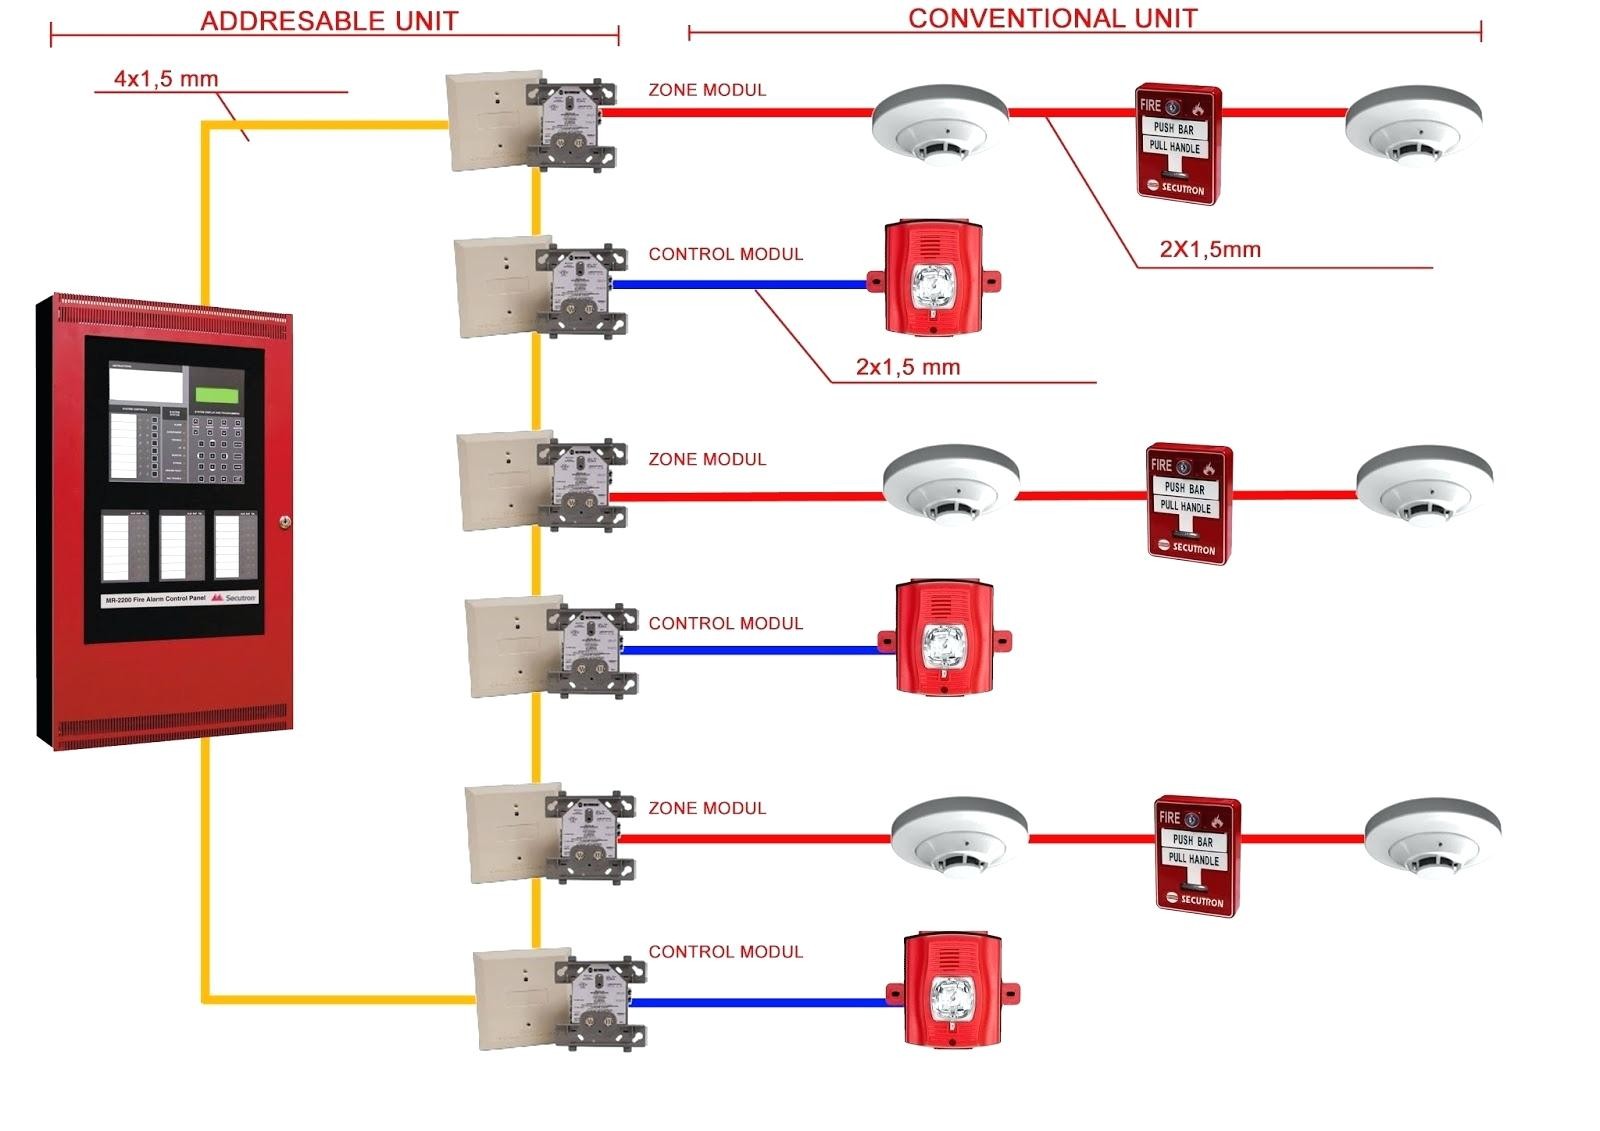 fire alarm horn strobe wiring diagram Collection Addressable Fire Alarm Wiring Diagram 1 8